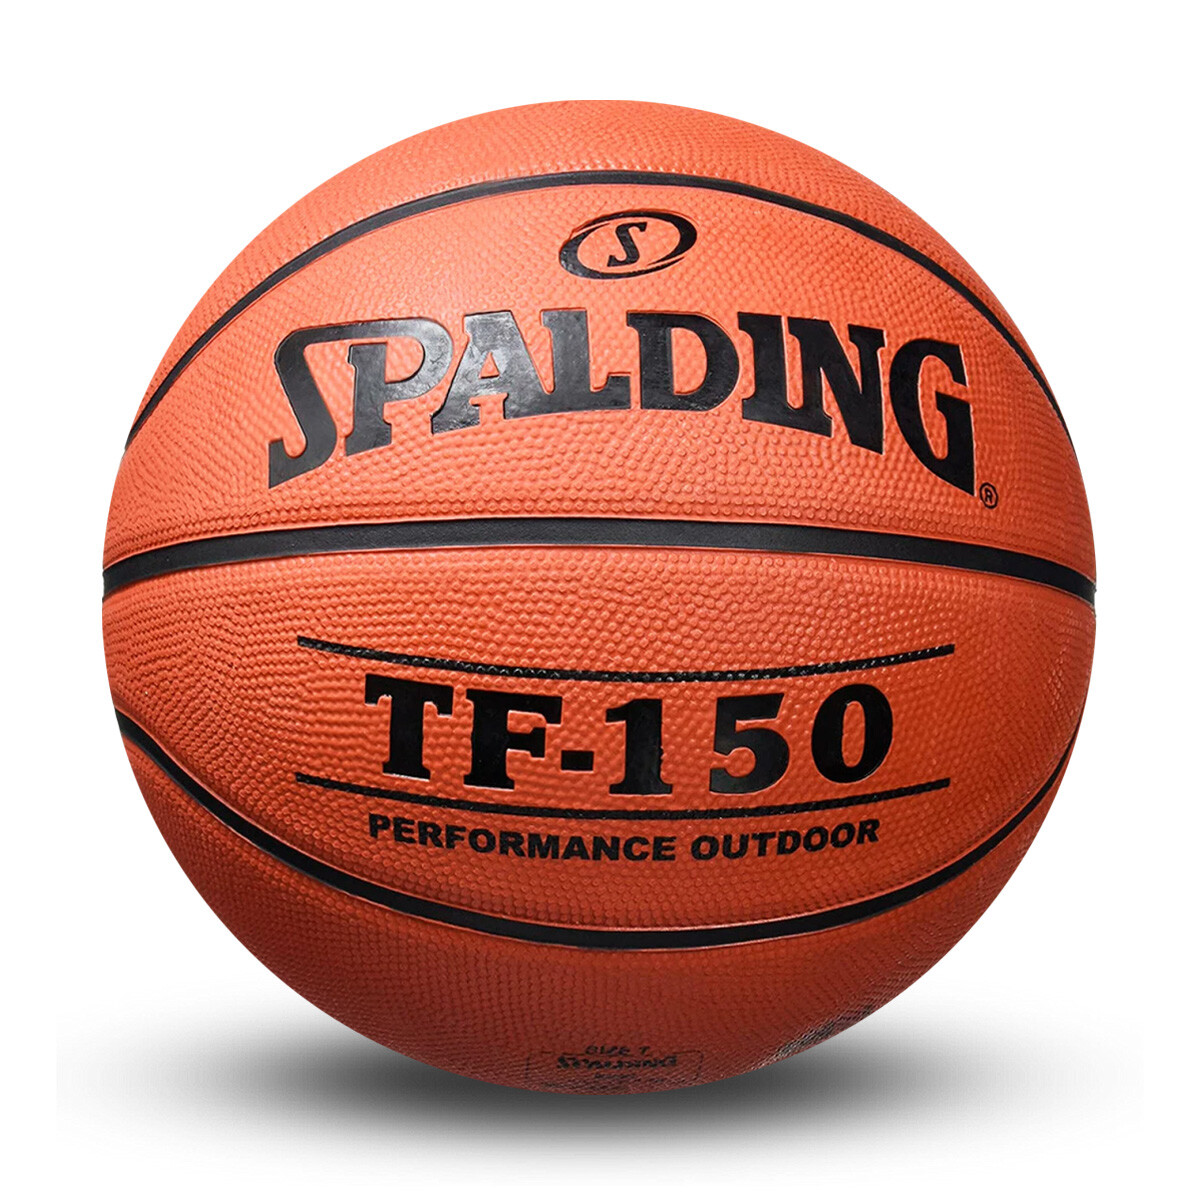 Pelota Spalding Basketball Tf 150 Original Goma N5 - TF 150 Performance Outdoor 